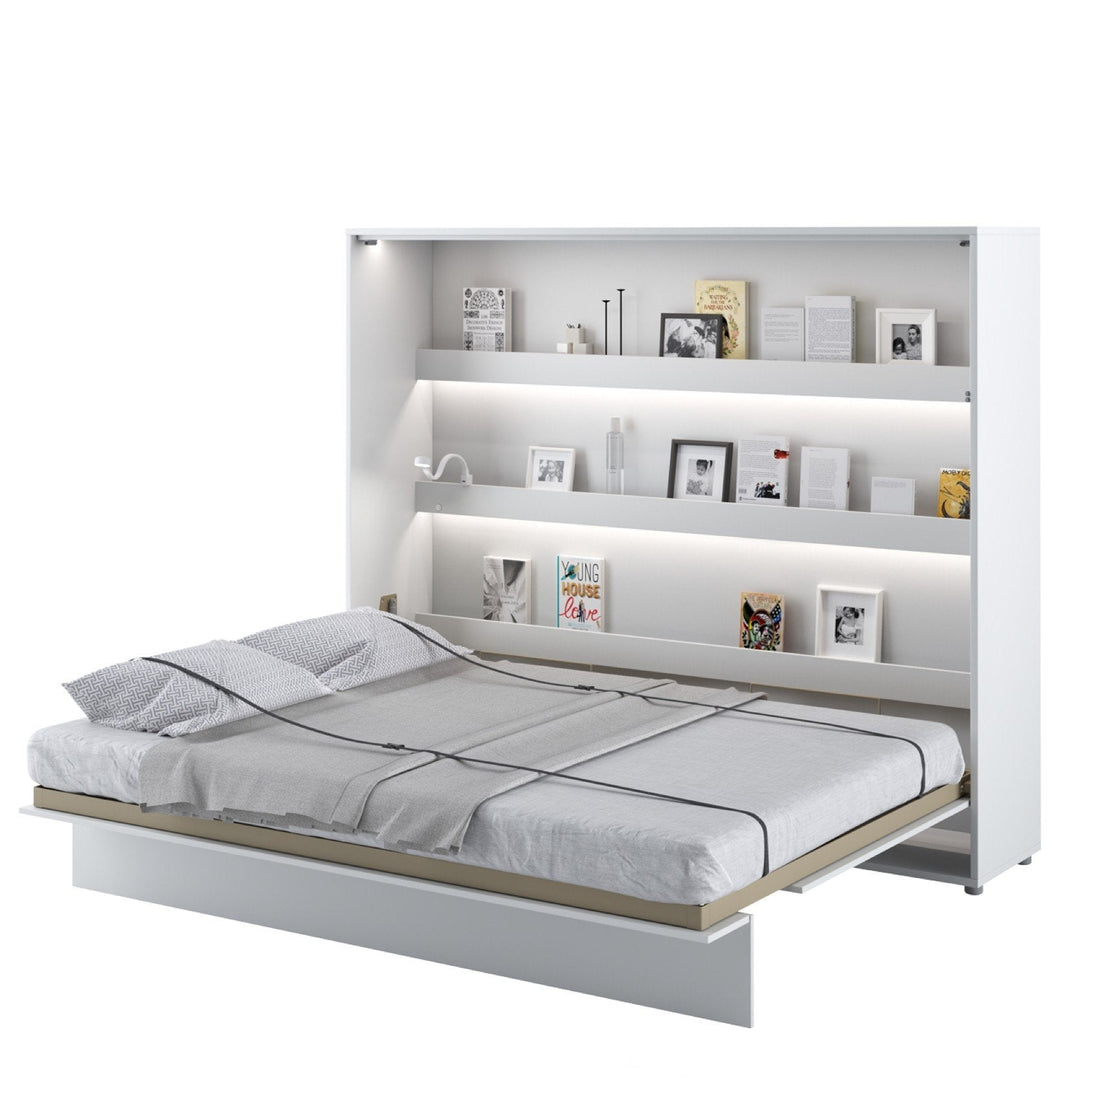 BC-14 Horizontal Wall Bed Concept 160cm - £970.2 - Wall Bed 